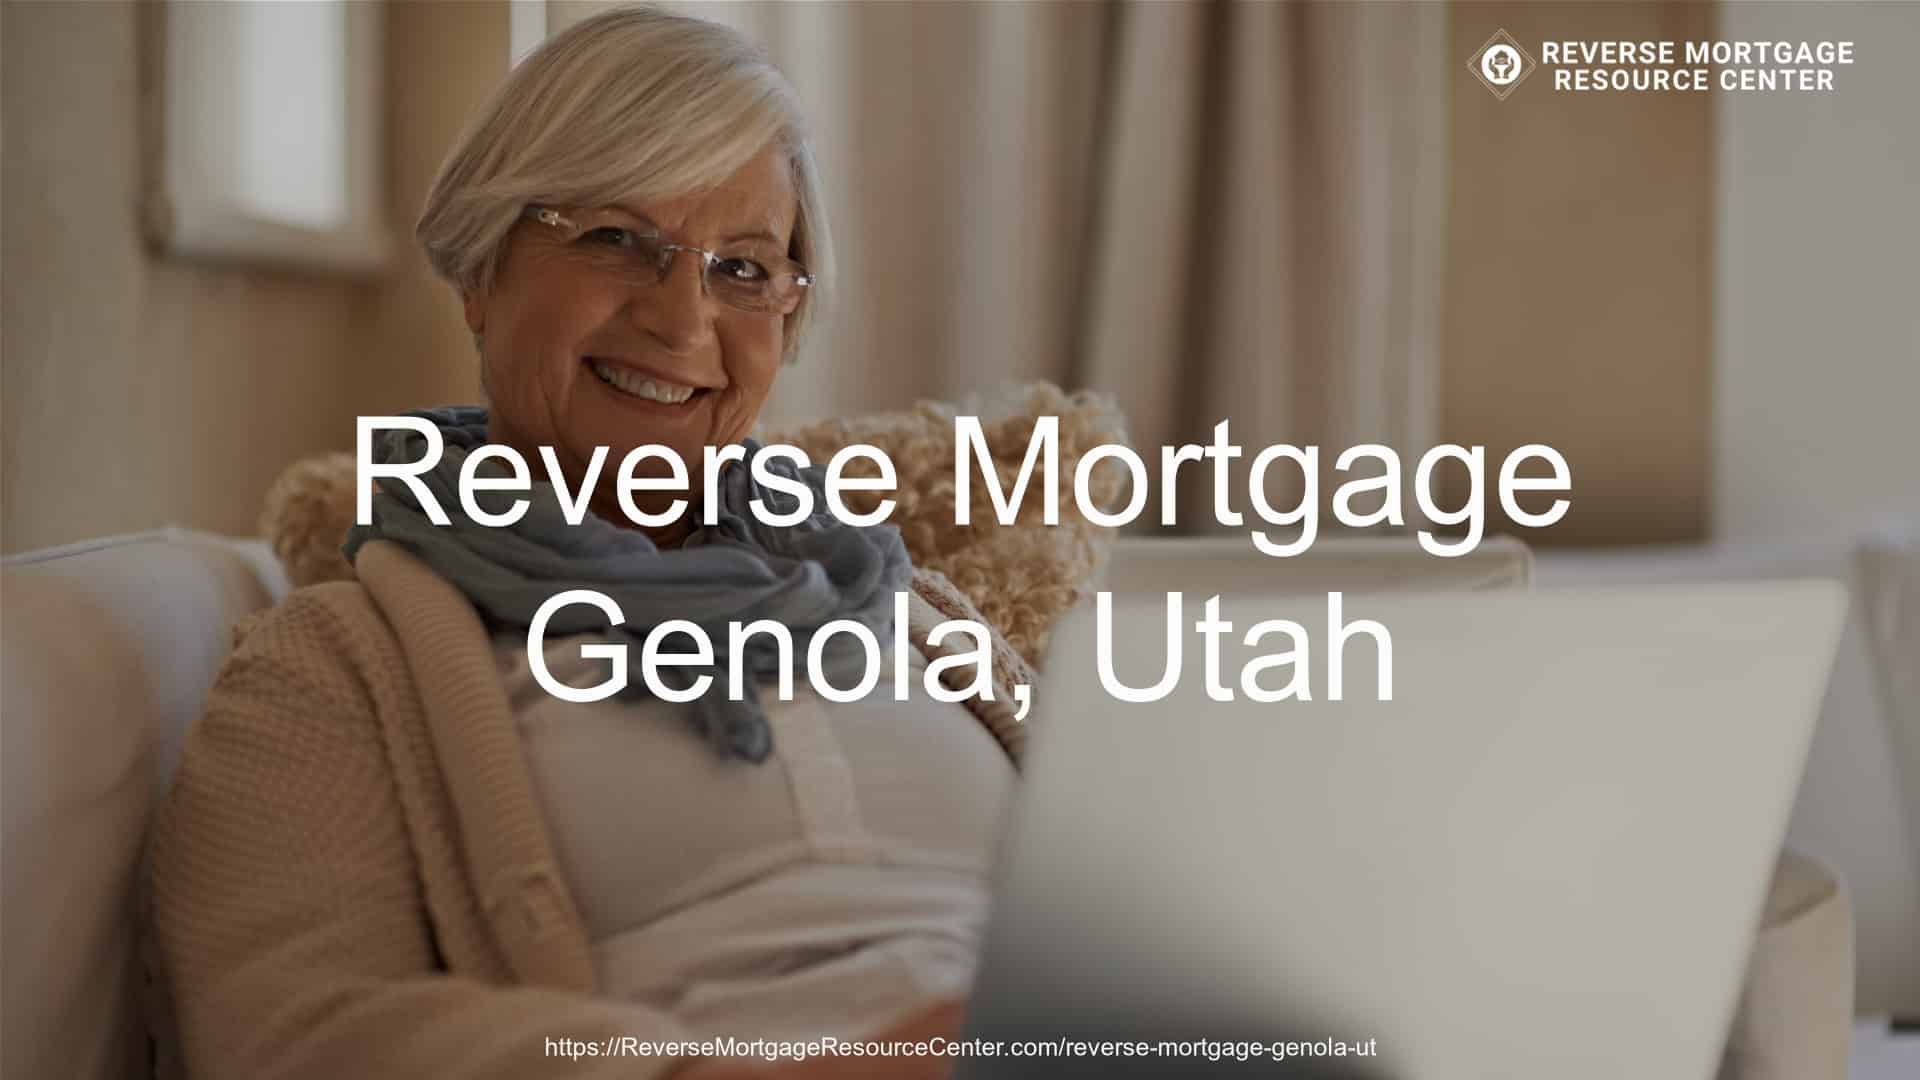 Reverse Mortgage Loans in Genola Utah